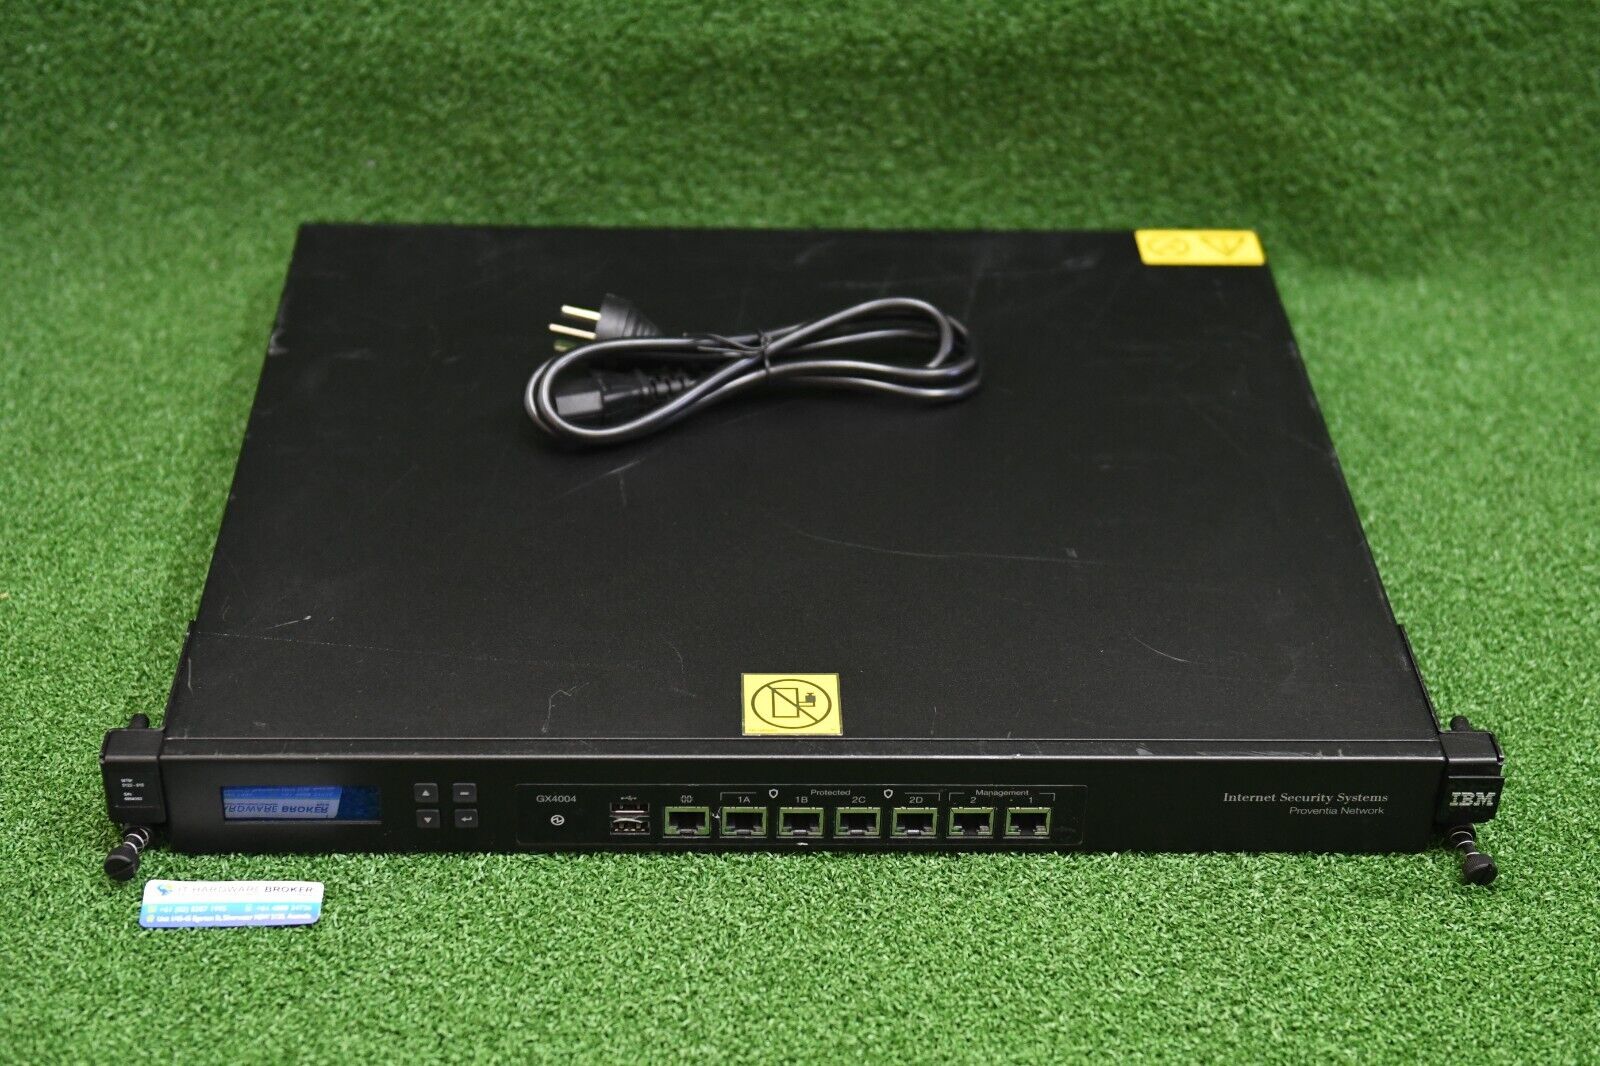 IBM GX4004C-V2 5122E 5122-015 51J2387 Network Security Appliance